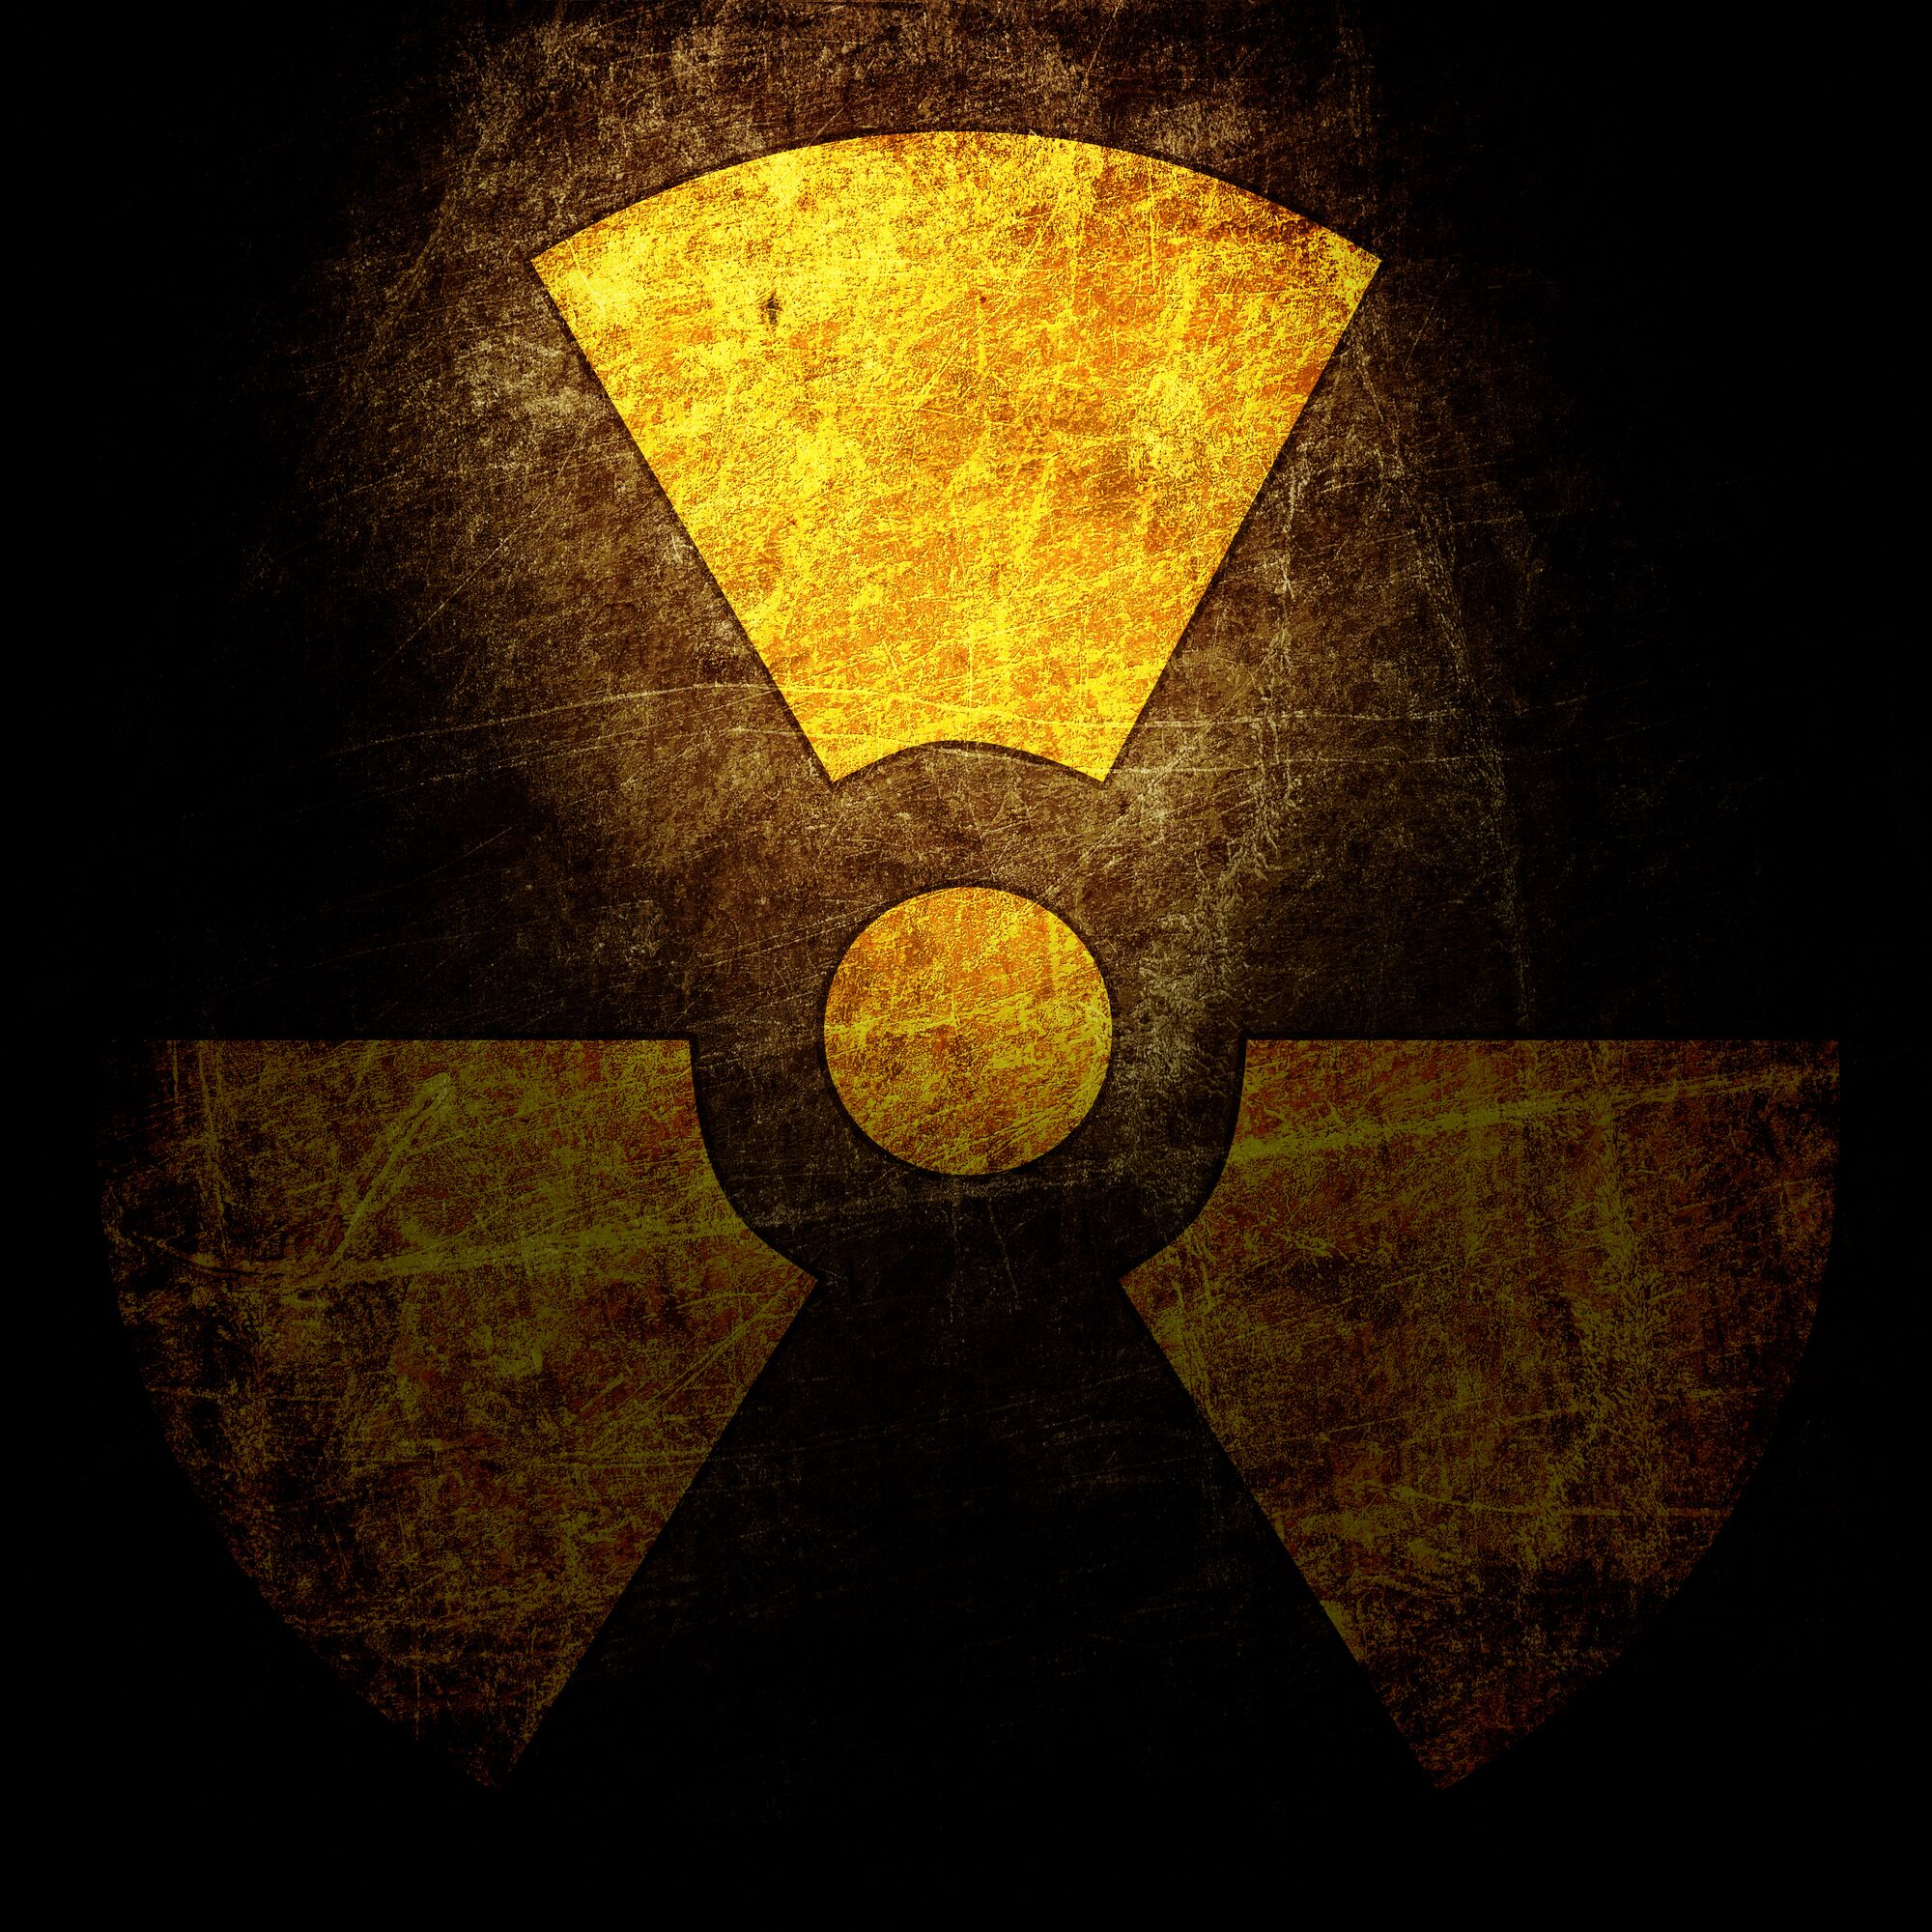 Russian Nukes, Ukrainian Nuclear Power Plants, and Australian Uranium